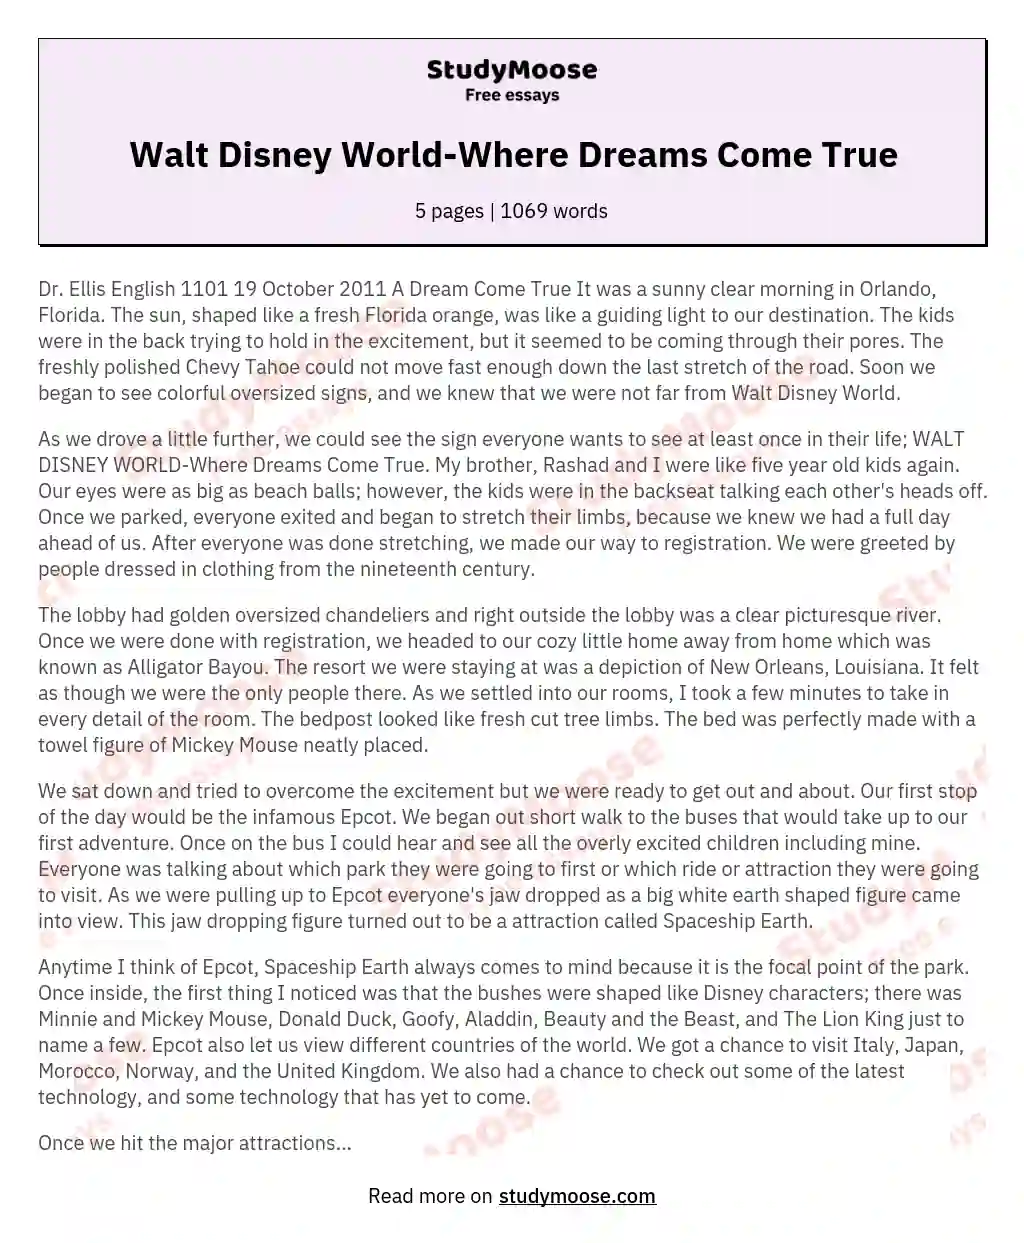 Walt Disney World-Where Dreams Come True